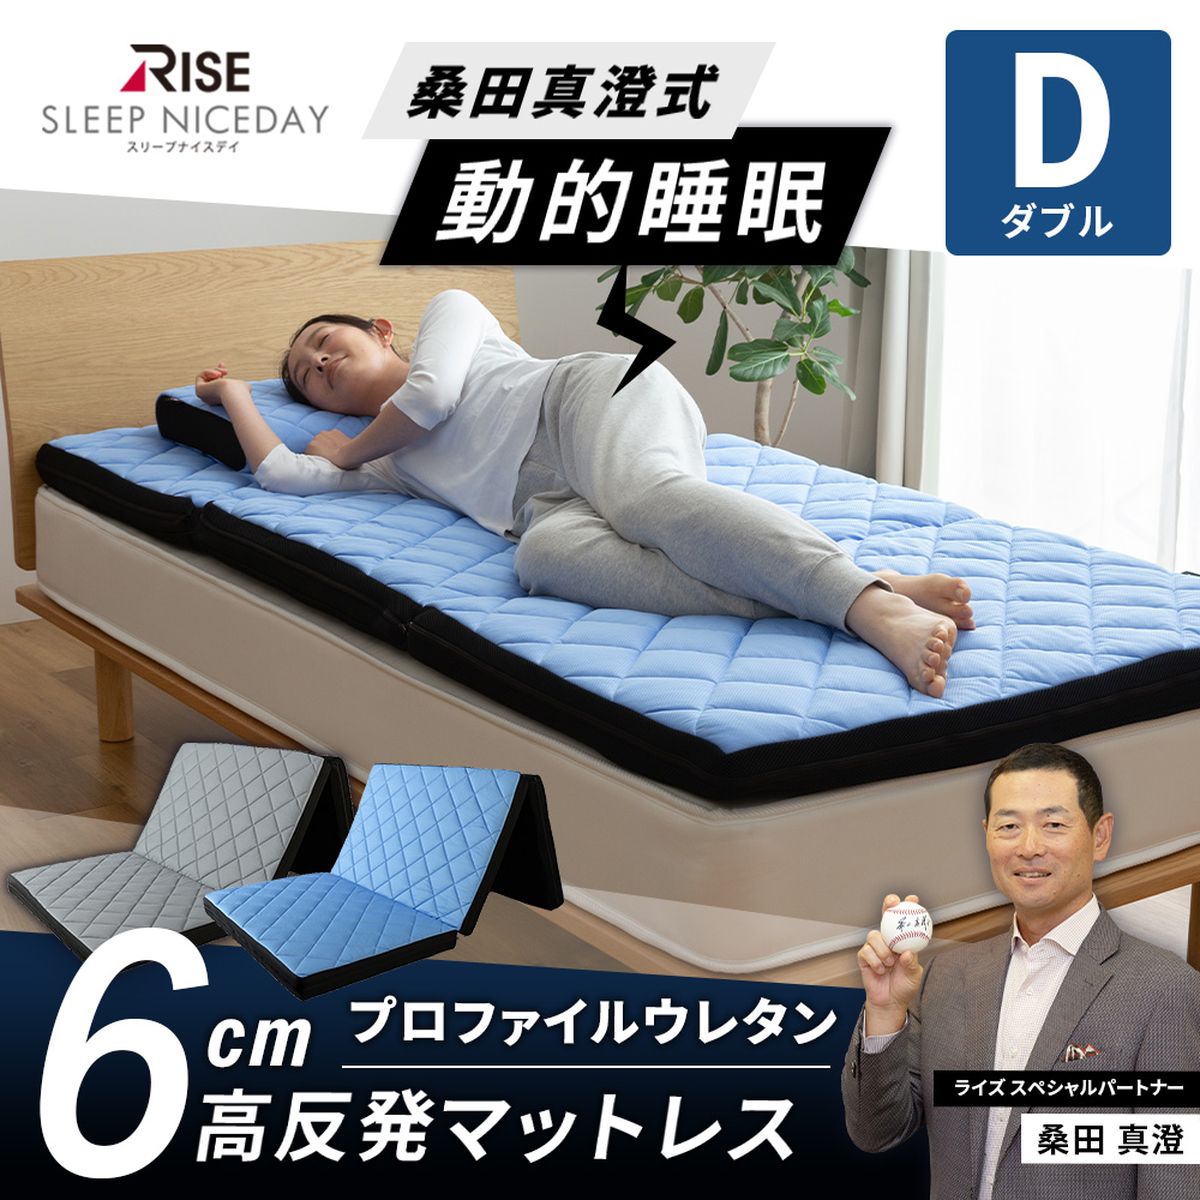 RISE Sleep Niceday 桑田真澄式 動的睡眠 高反発マットレス6cm ダブル グレー